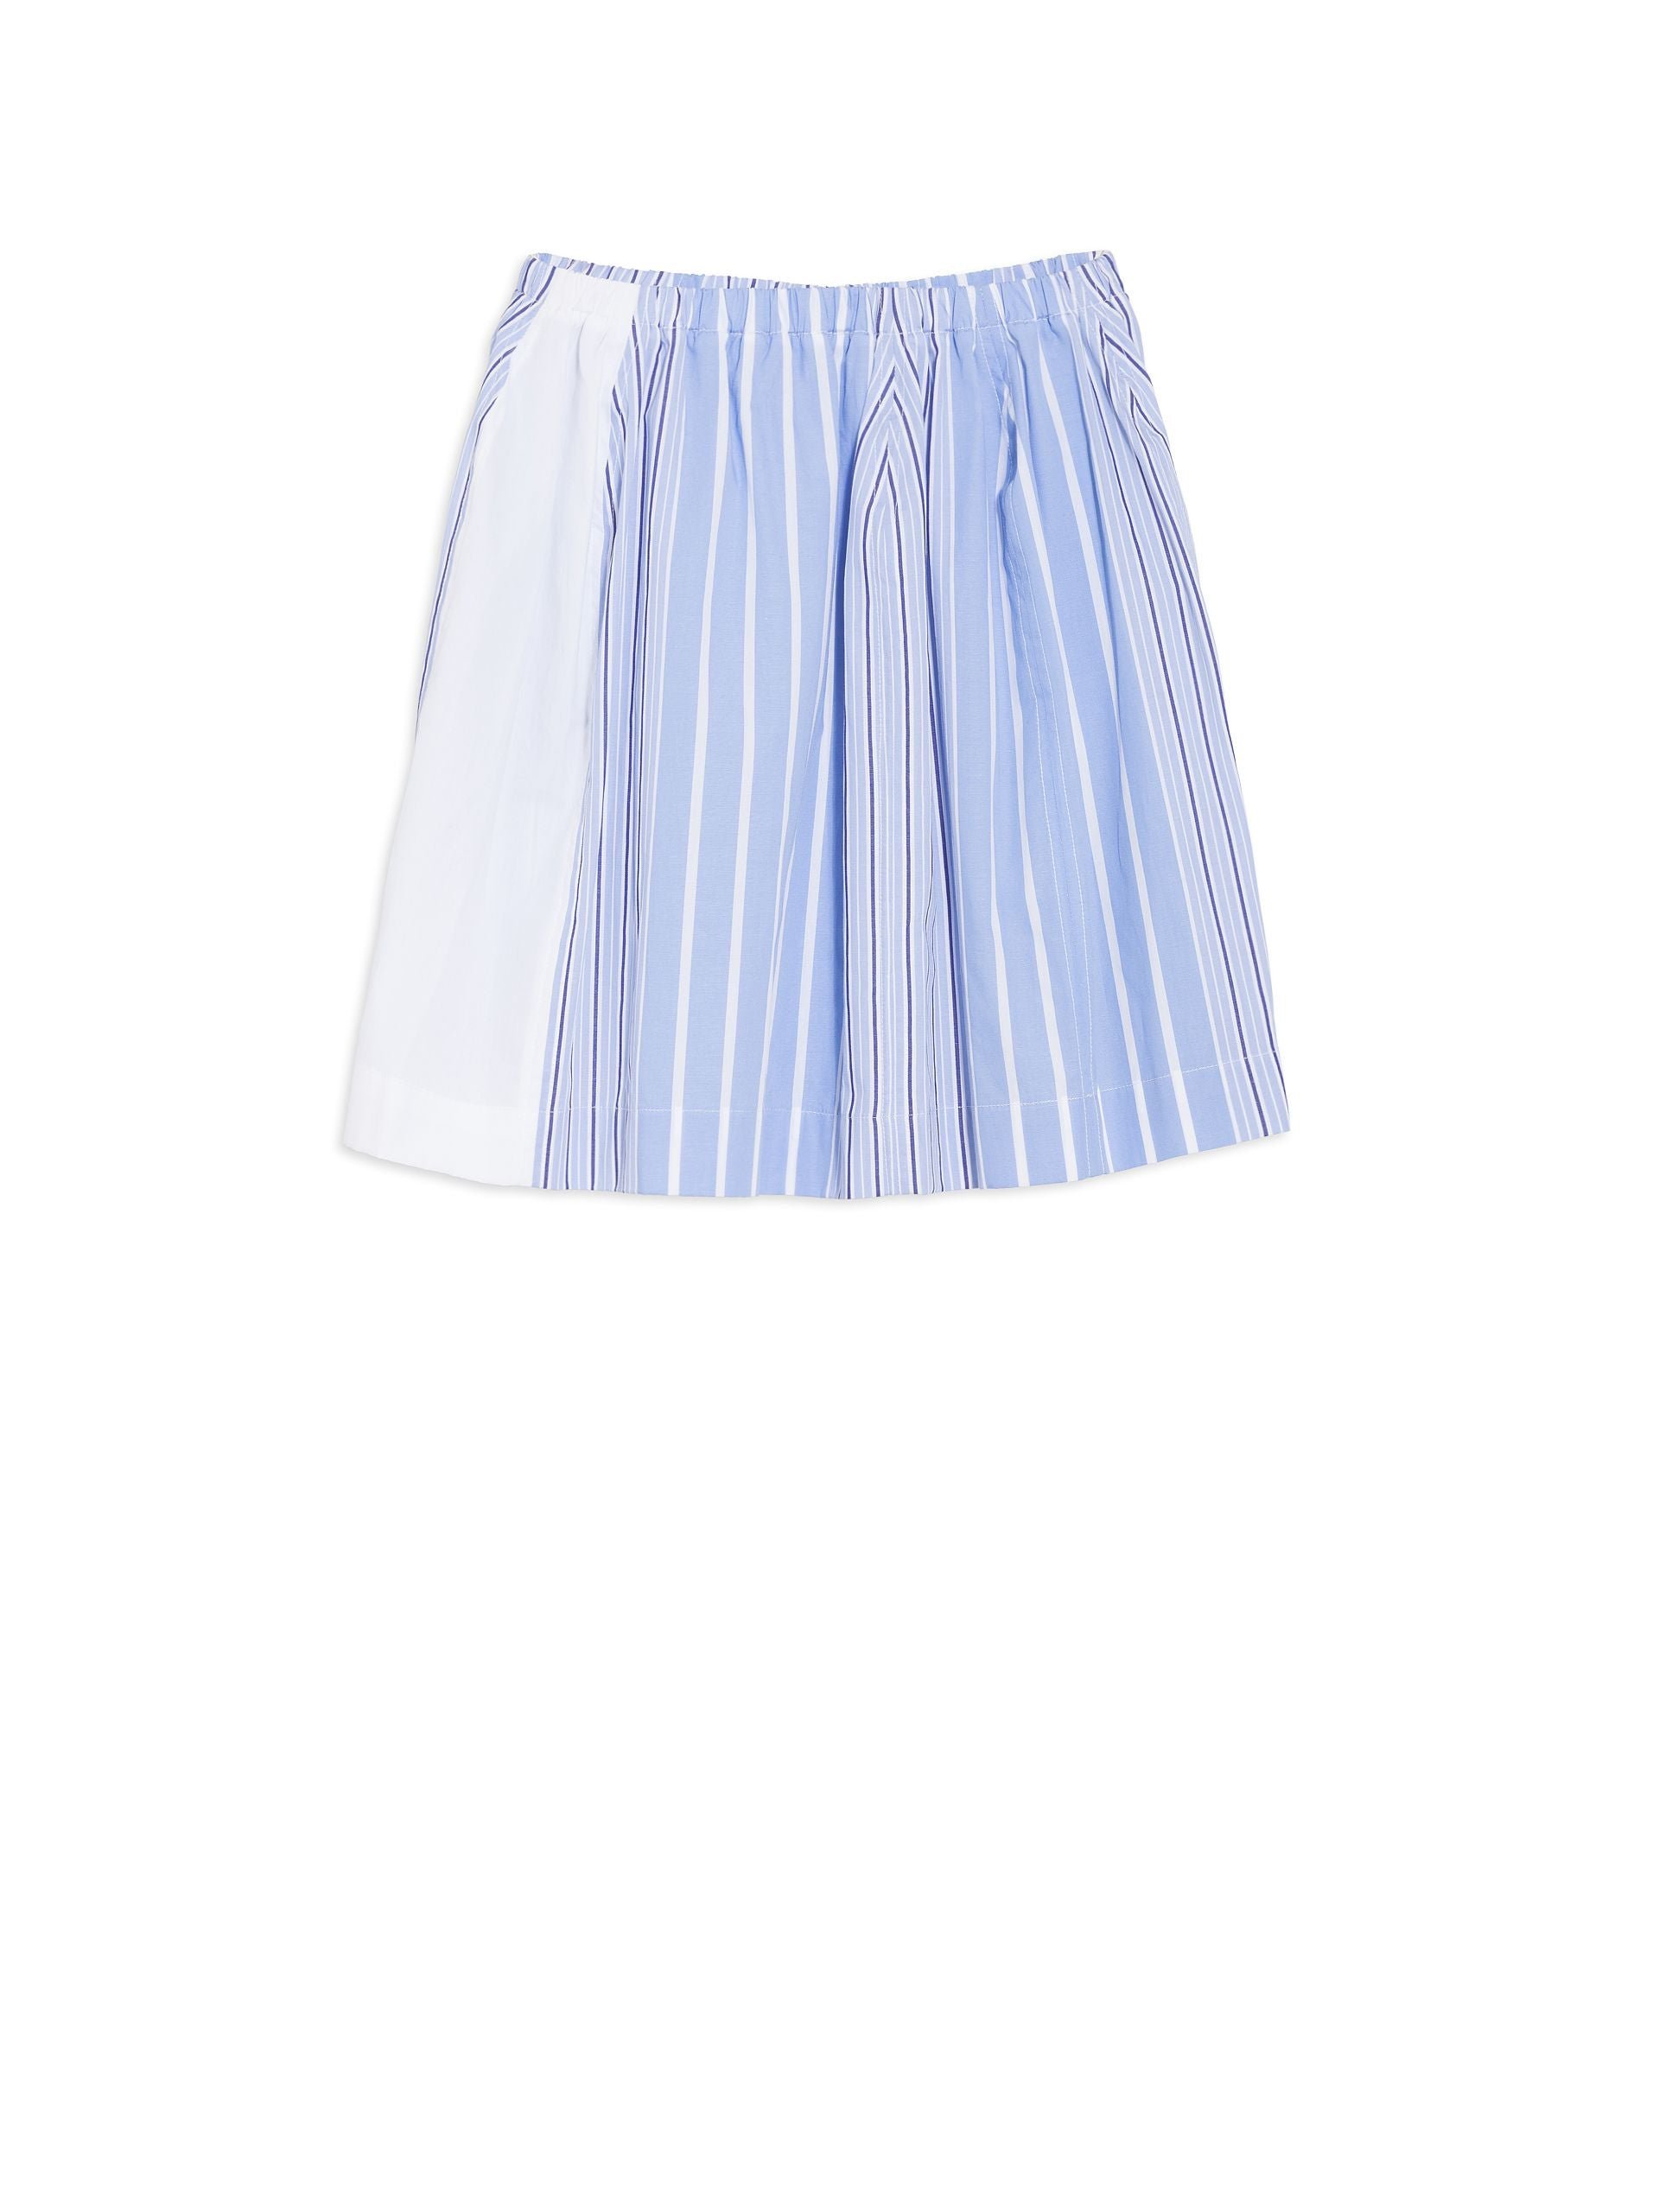 Girls Sky Blue Striped Cotton Skirt